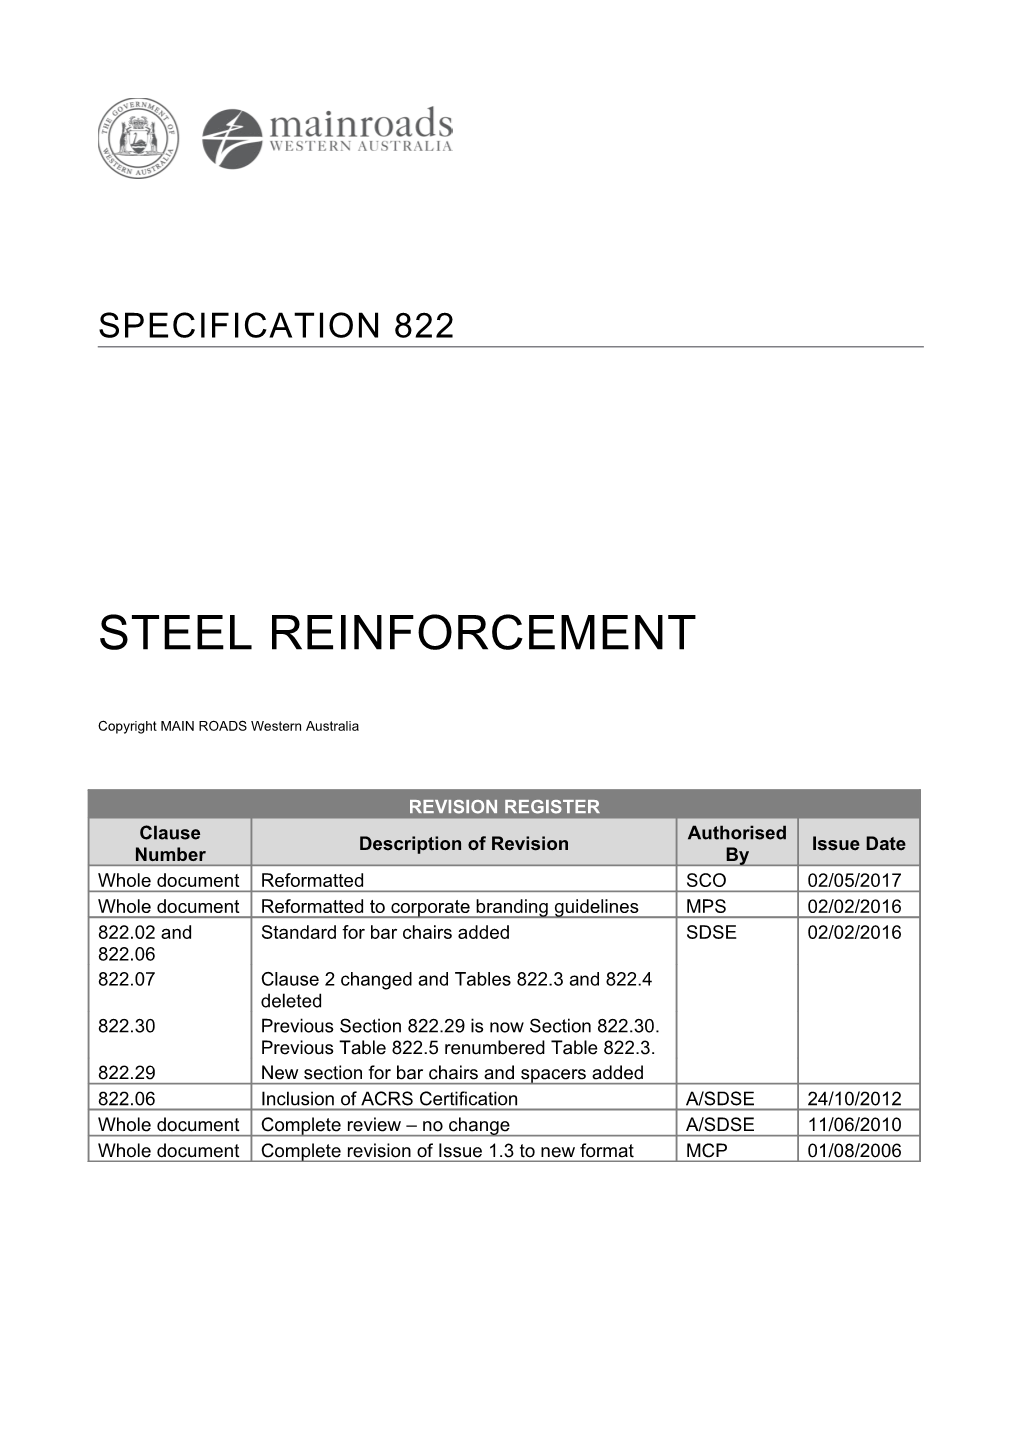 Steel Reinforcement